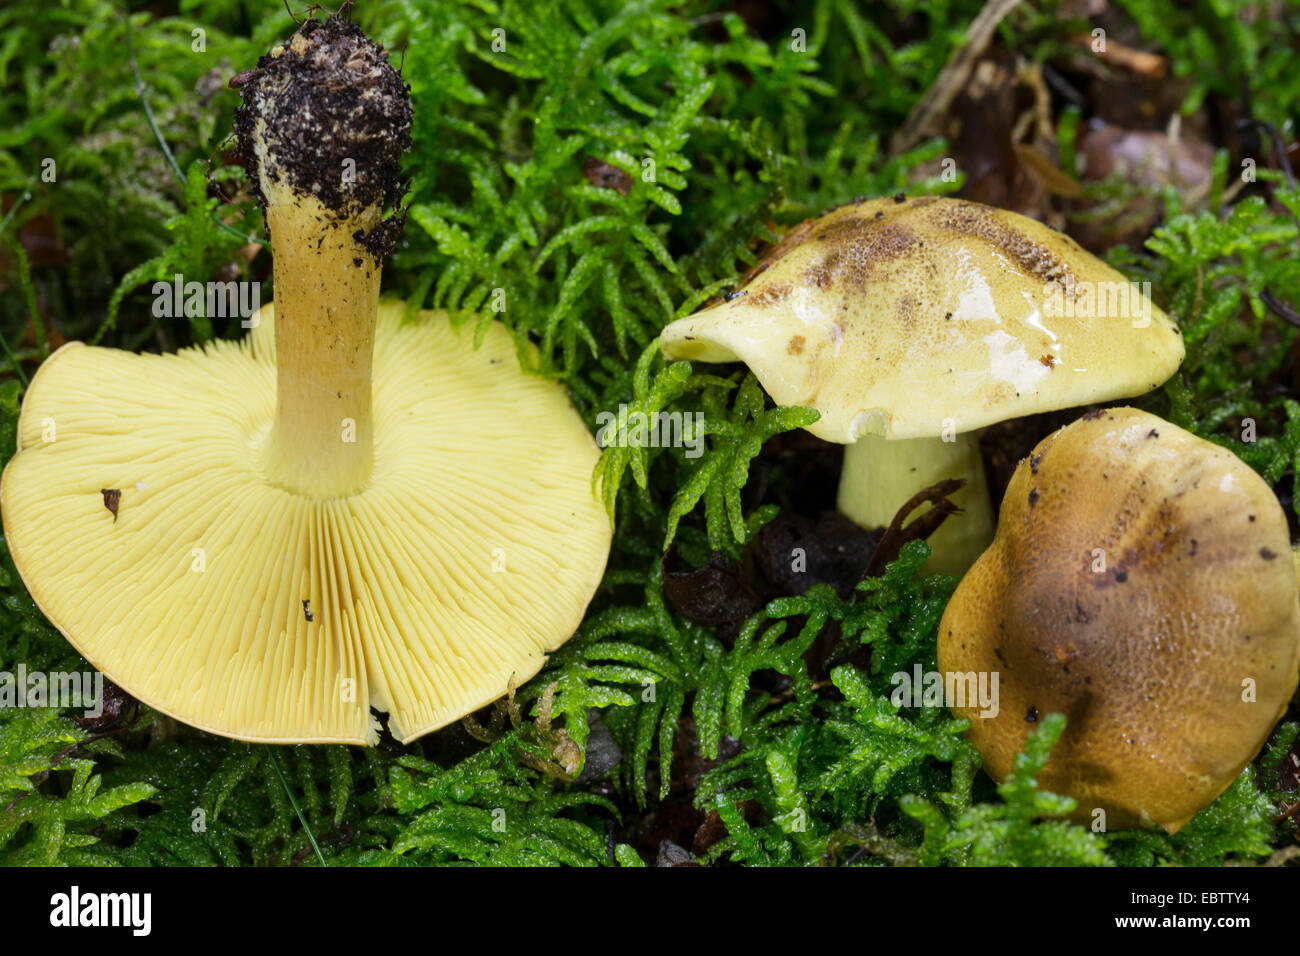 Man on horseback, Yellow knight, Yellow knight mushroom (Tricholoma equestre, Tricholoma flavovirens, Tricholoma auratum), fruiting bodies on mossy ground, Germany Stock Photo